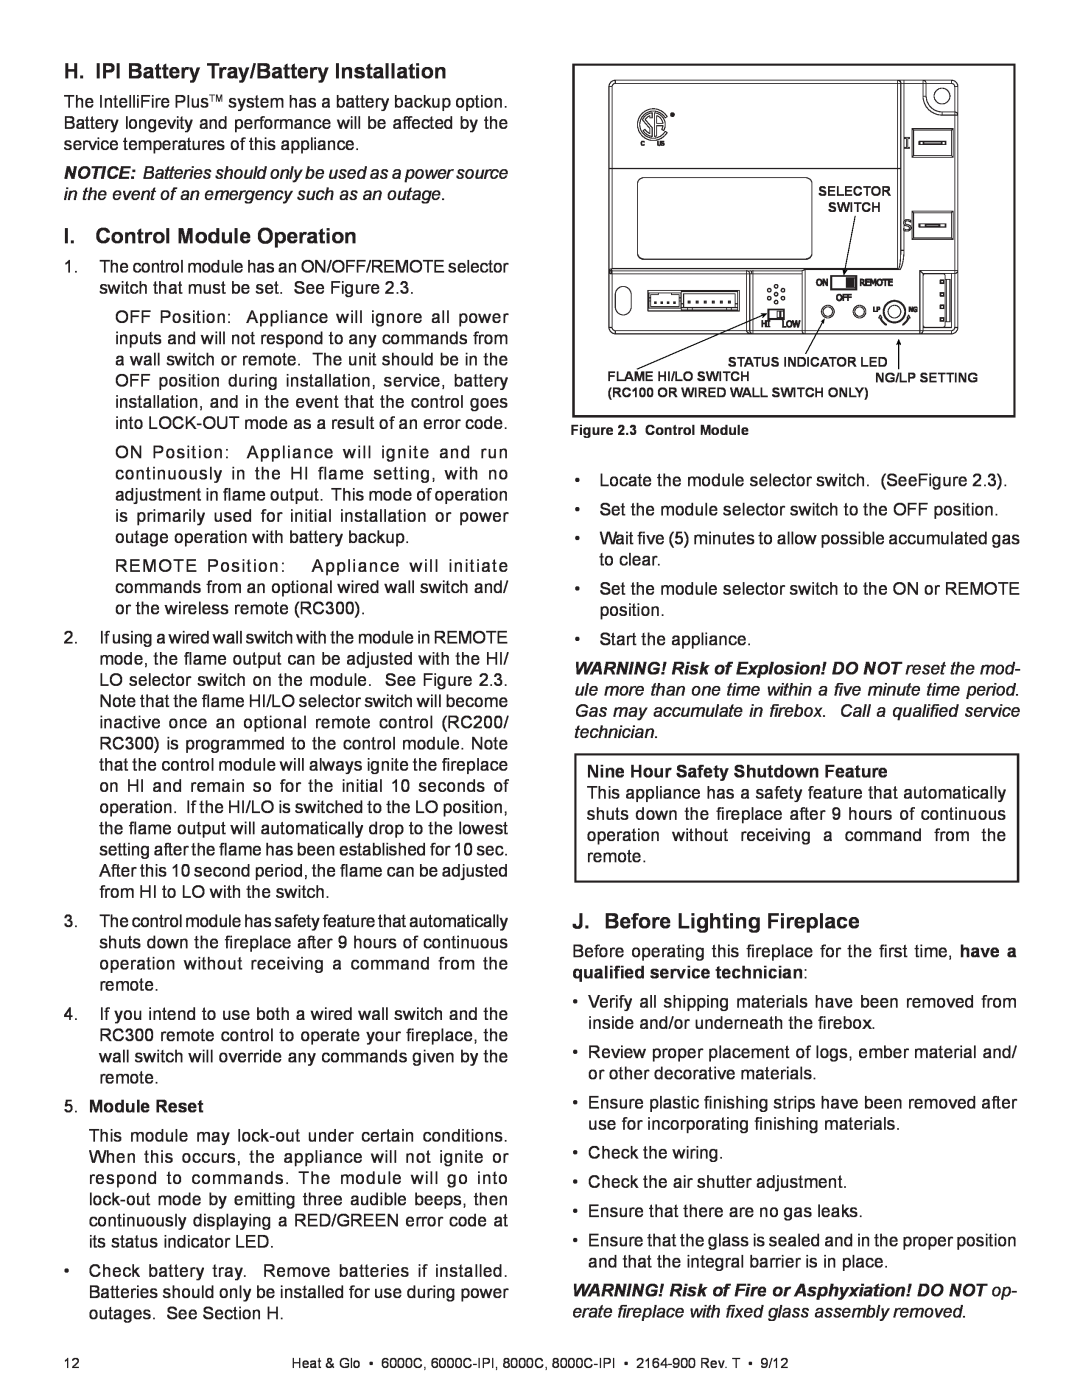 Heat & Glo LifeStyle 6000C manual H. IPI Battery Tray/Battery Installation, I. Control Module Operation, Module Reset 